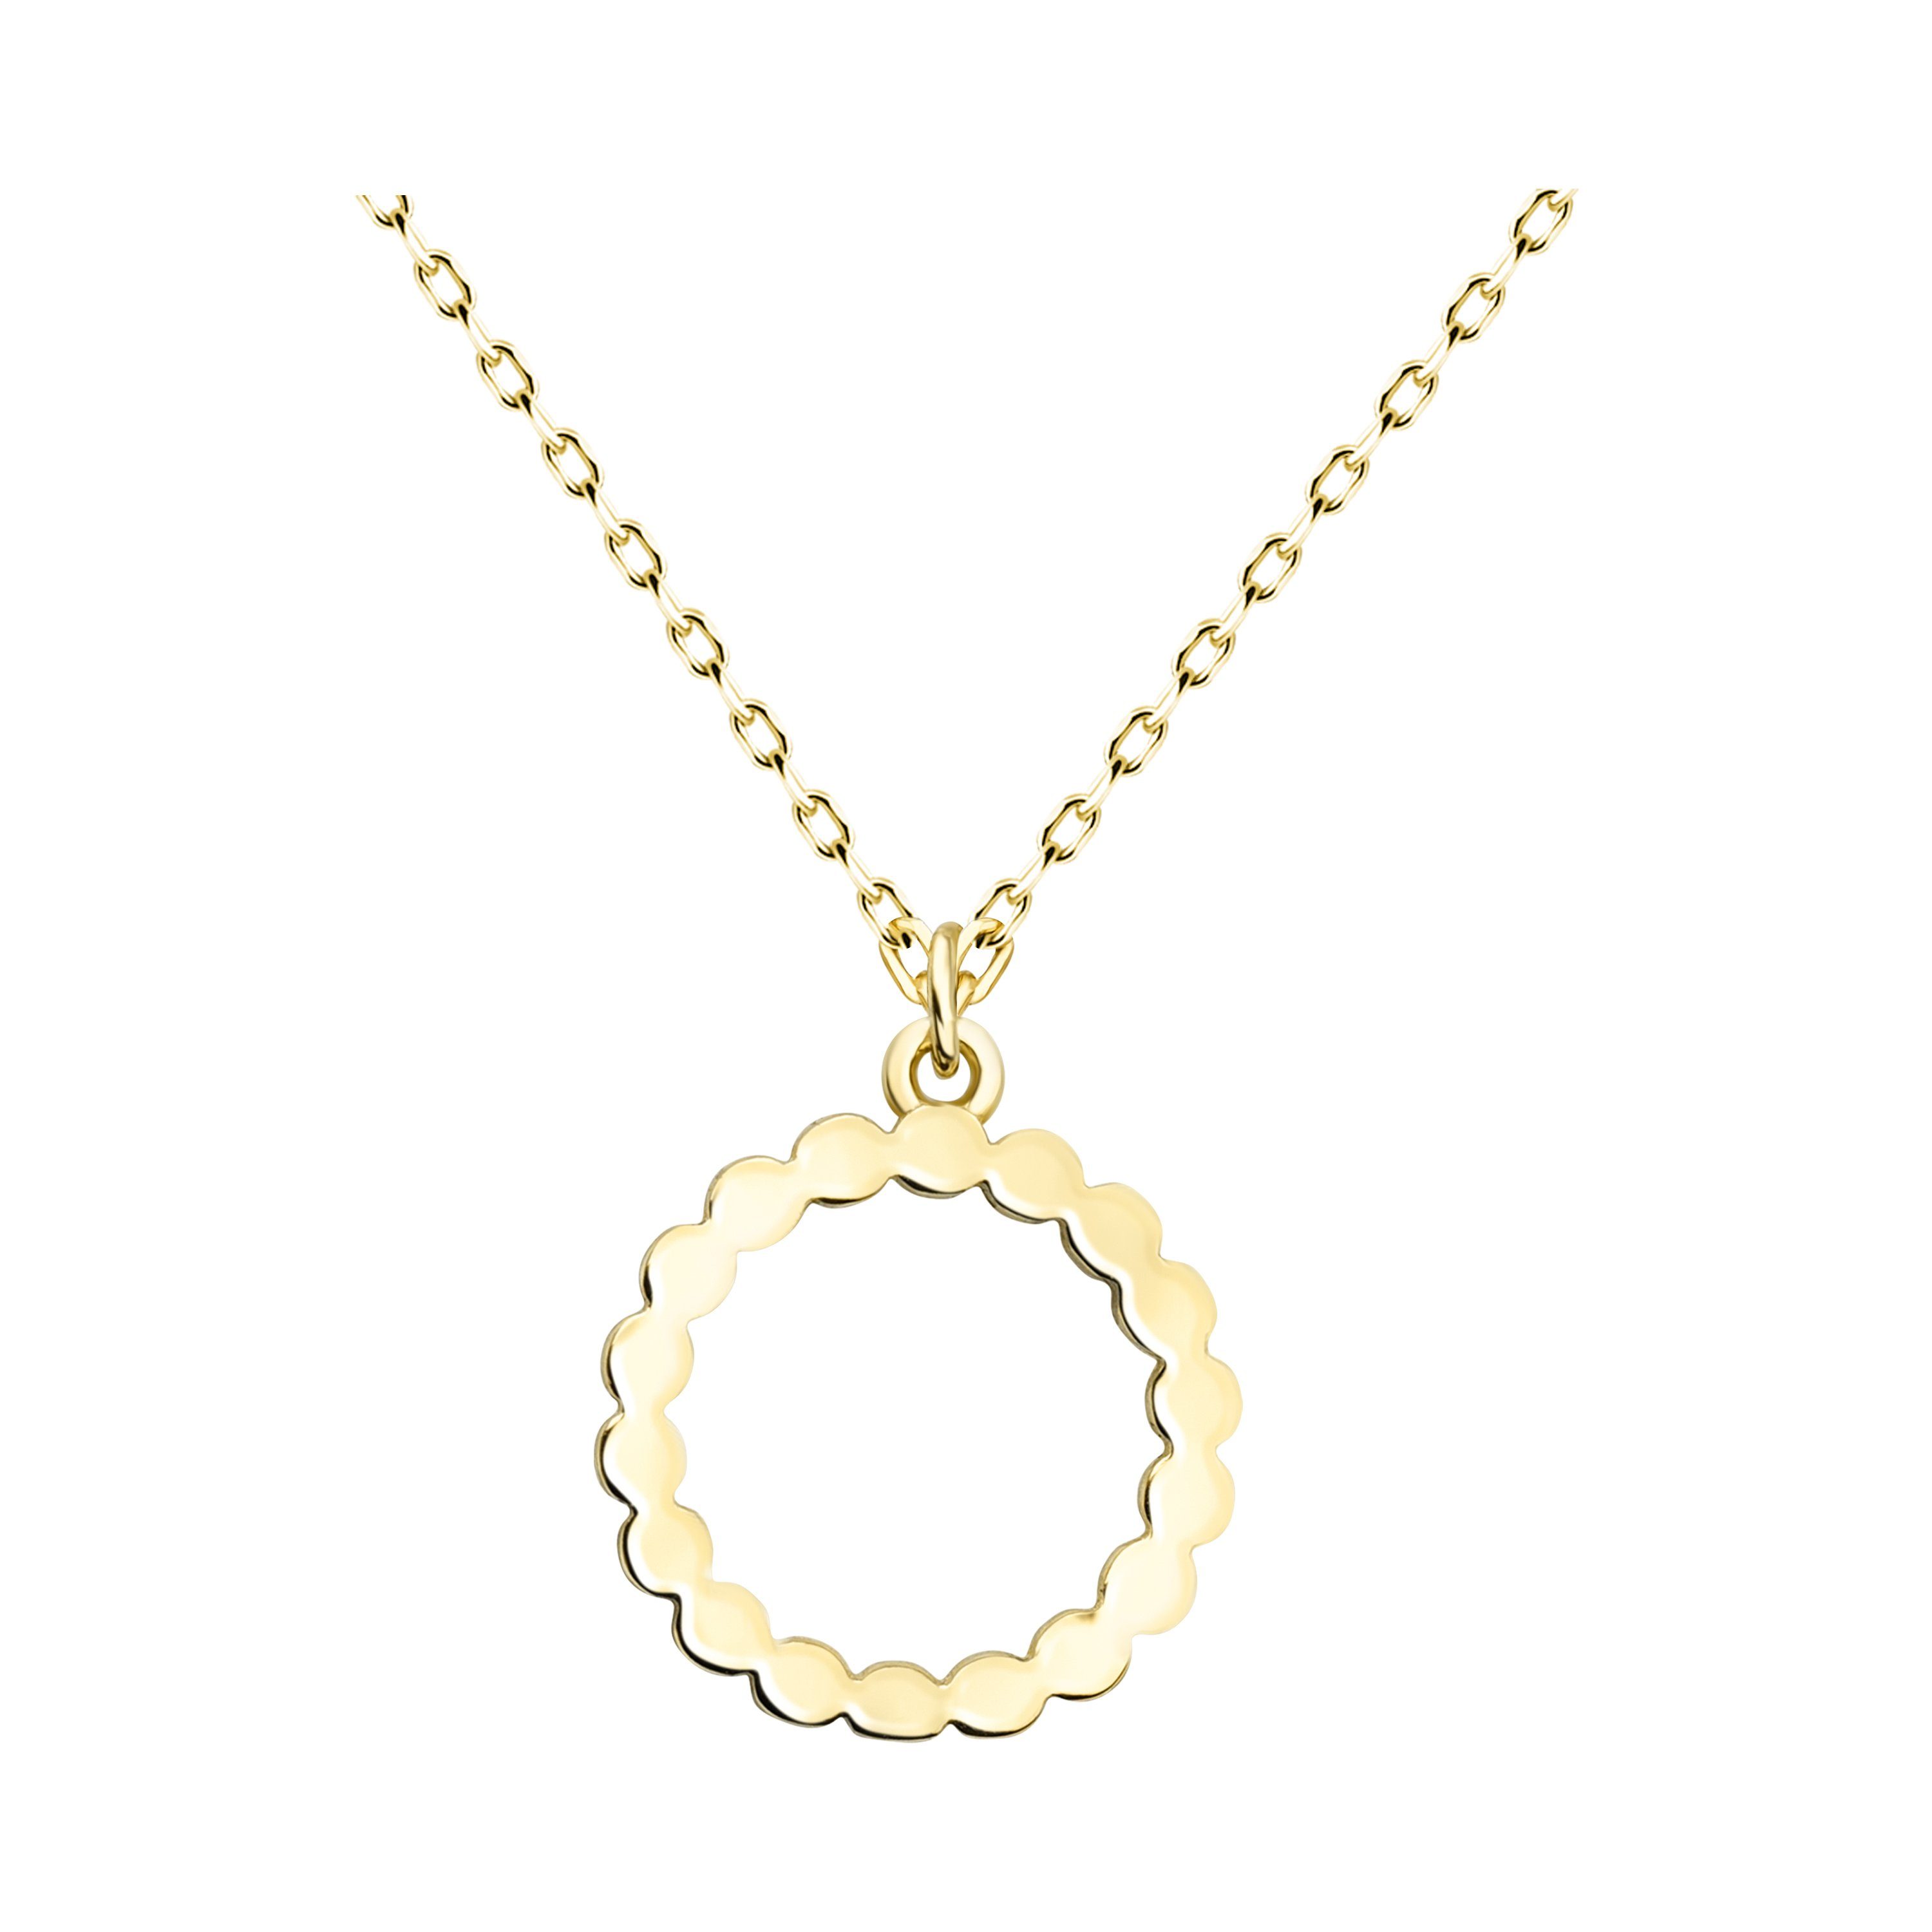 Sofia Milani Kette mit Anhänger Kreis, 925 Silber Damen Schmuck gold | Silberketten